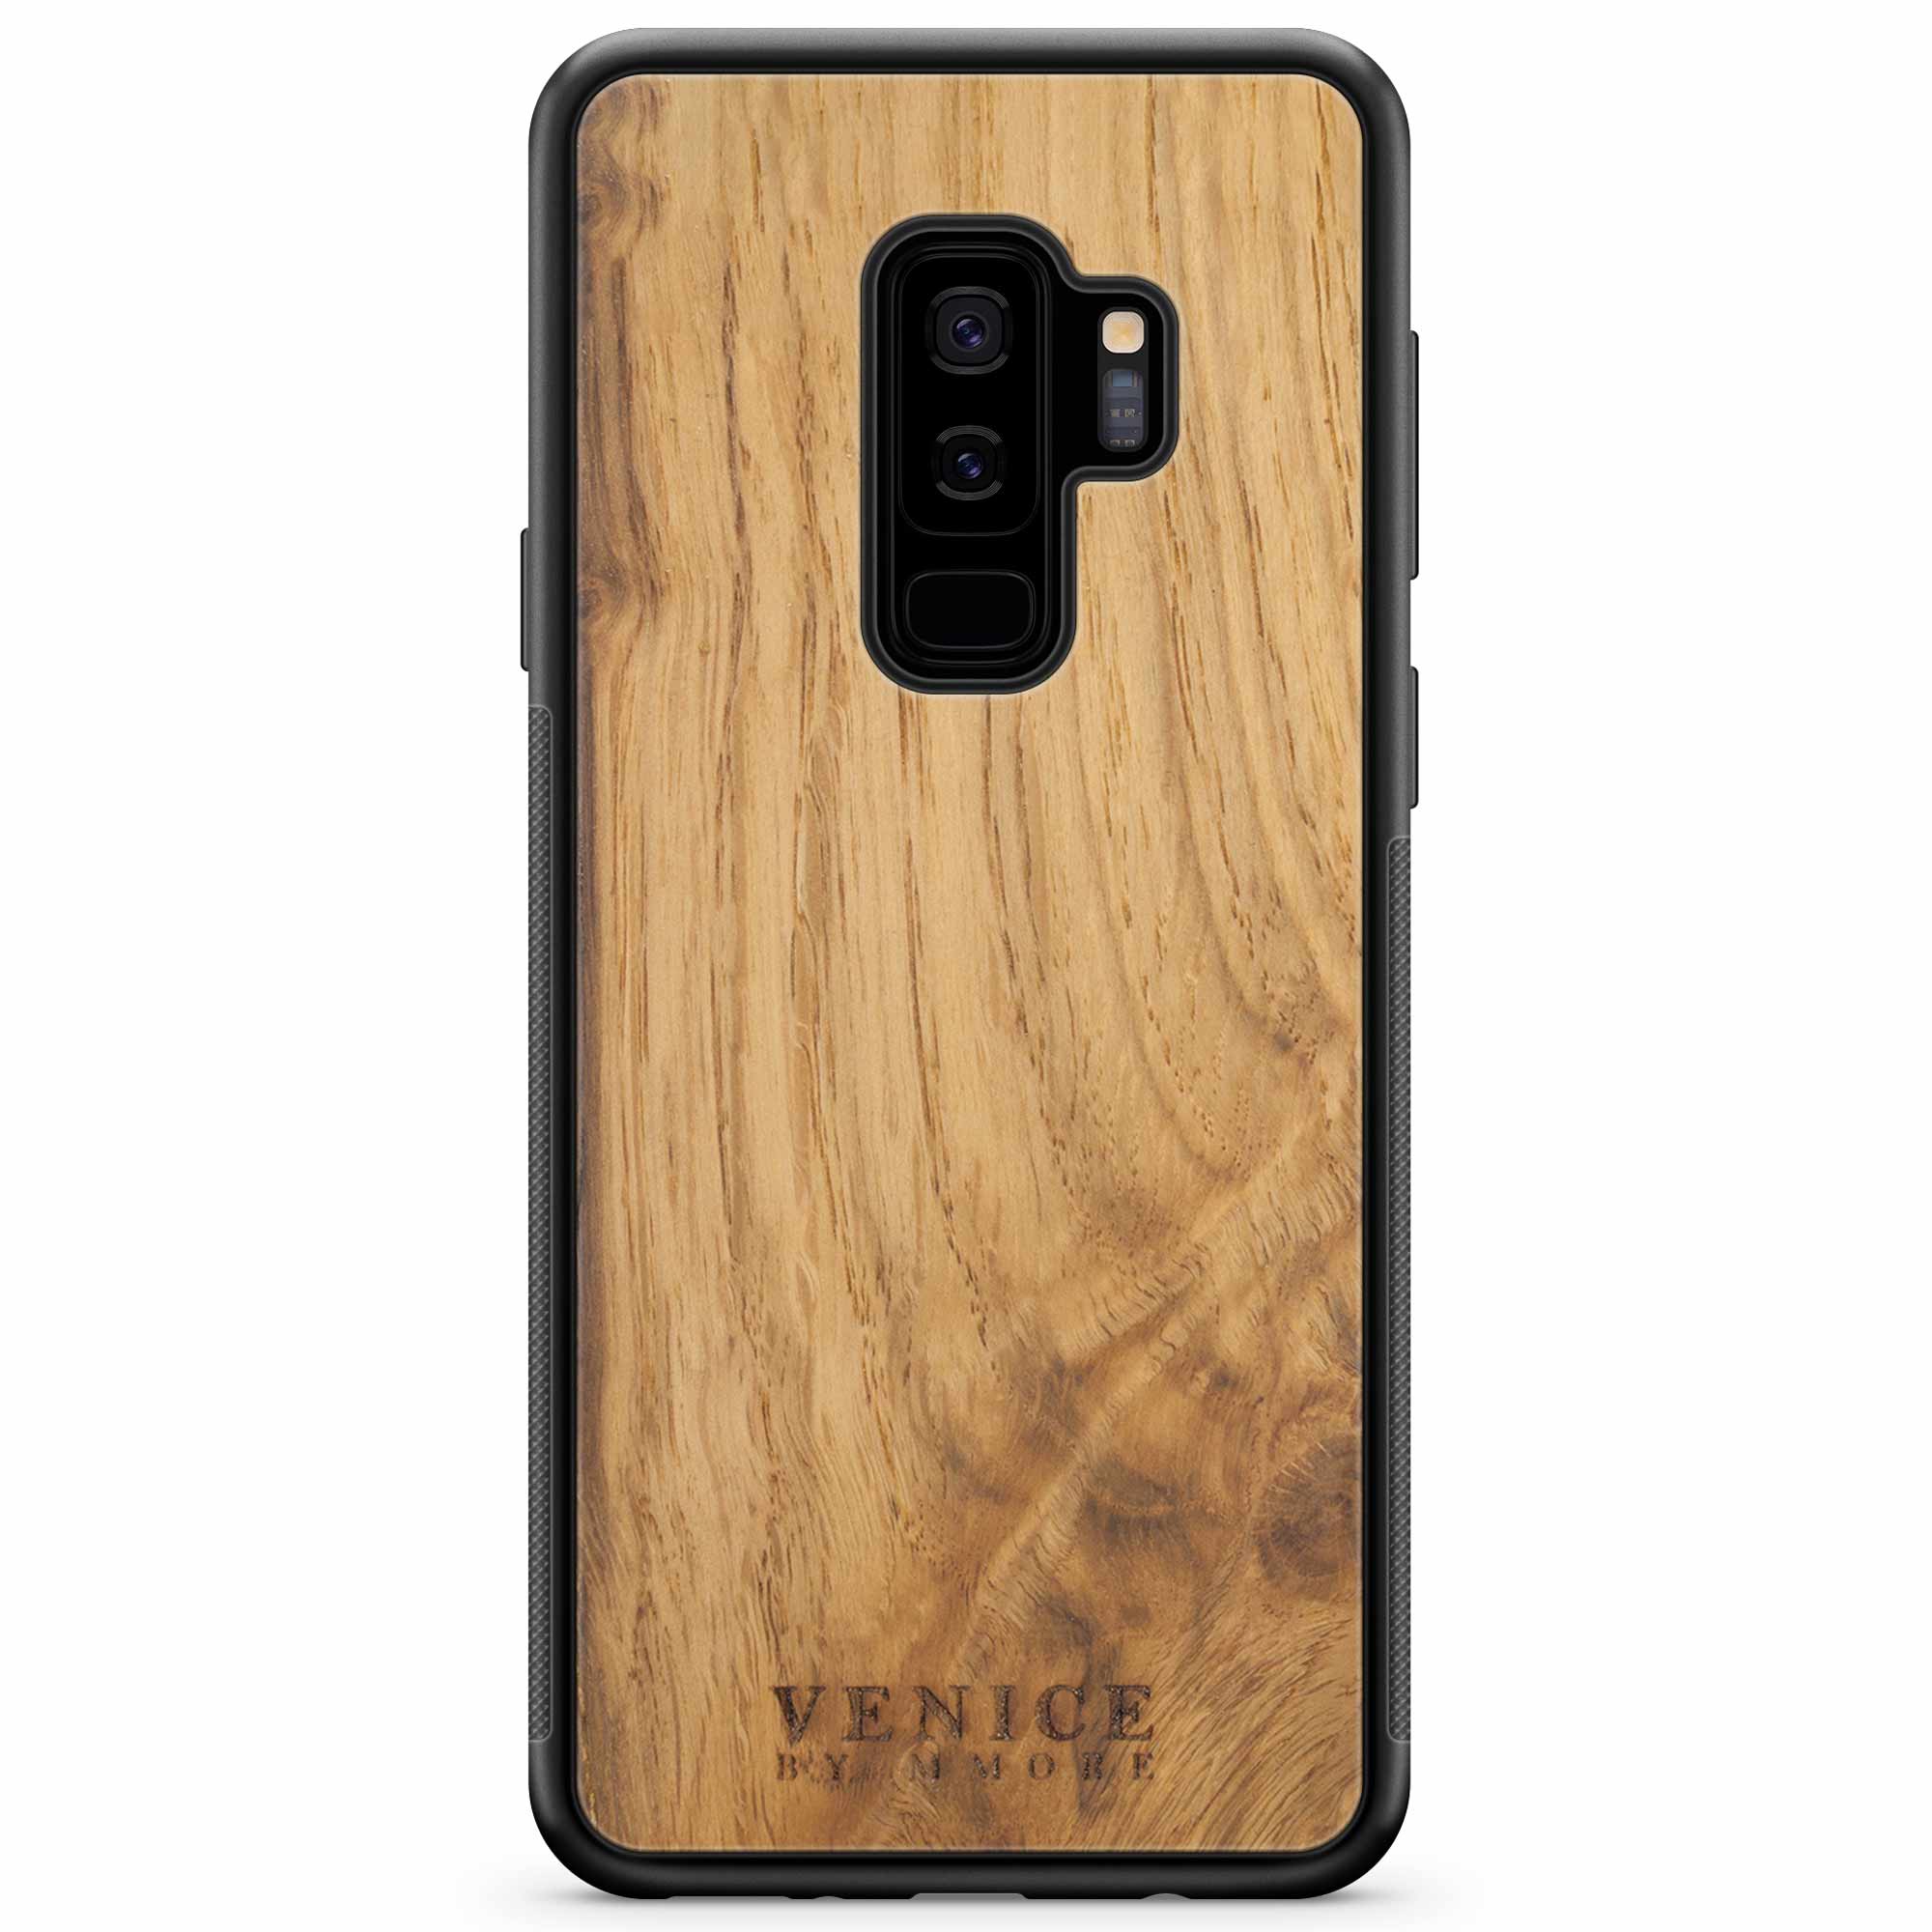 Venecia Lettering Samsung S9 Plus Carcasa de madera para teléfono